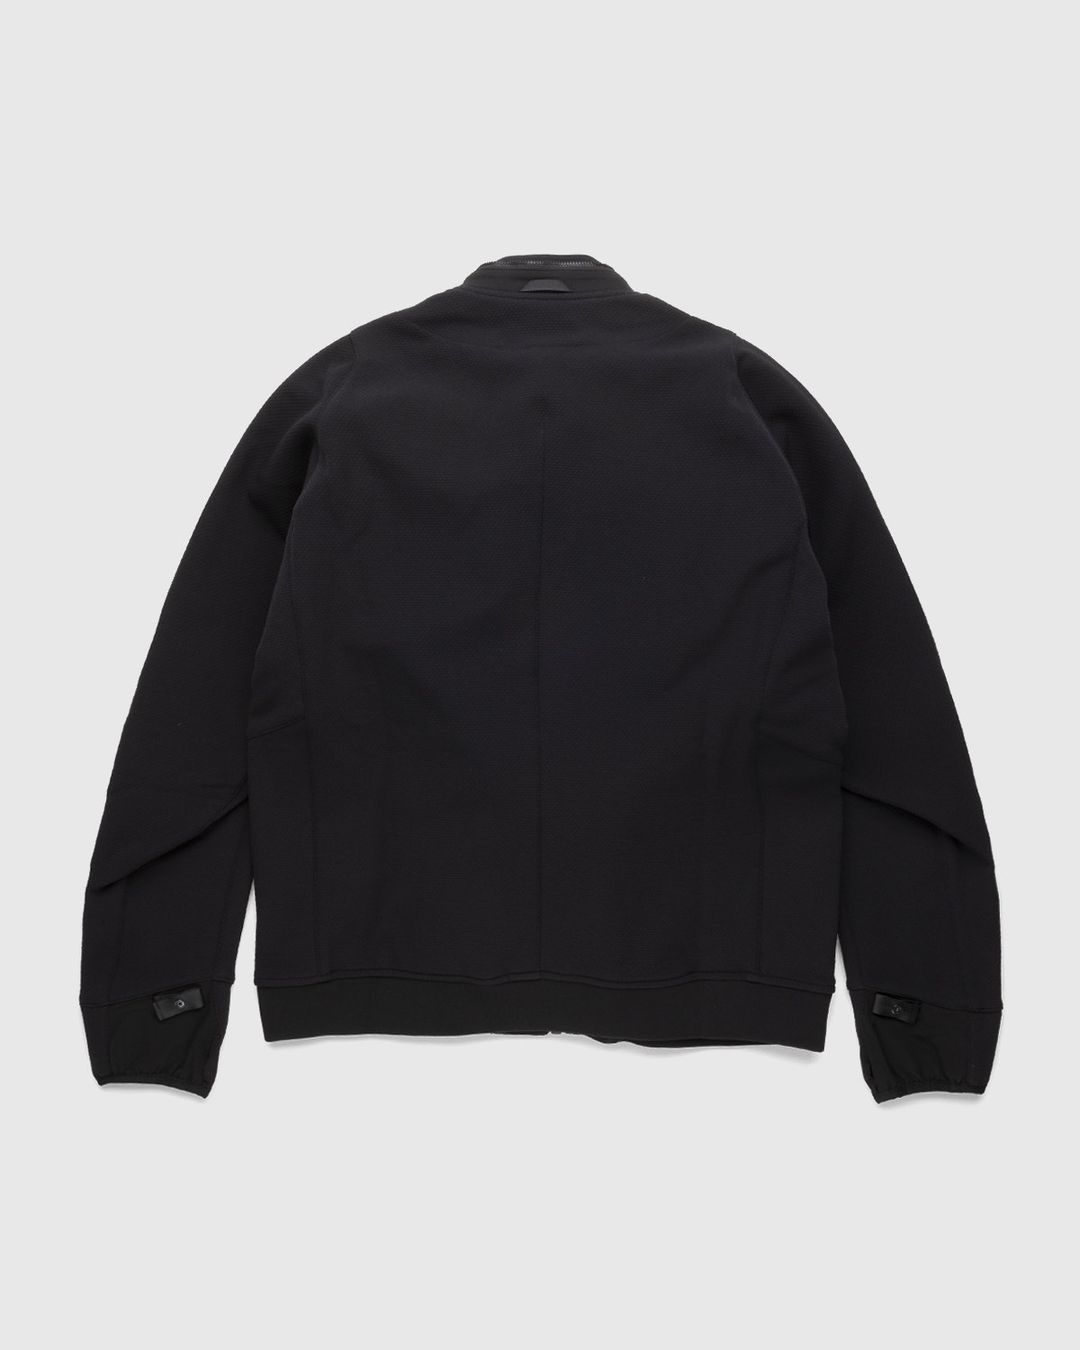 ACRONYM – J90-SS Jacket Black | Highsnobiety Shop